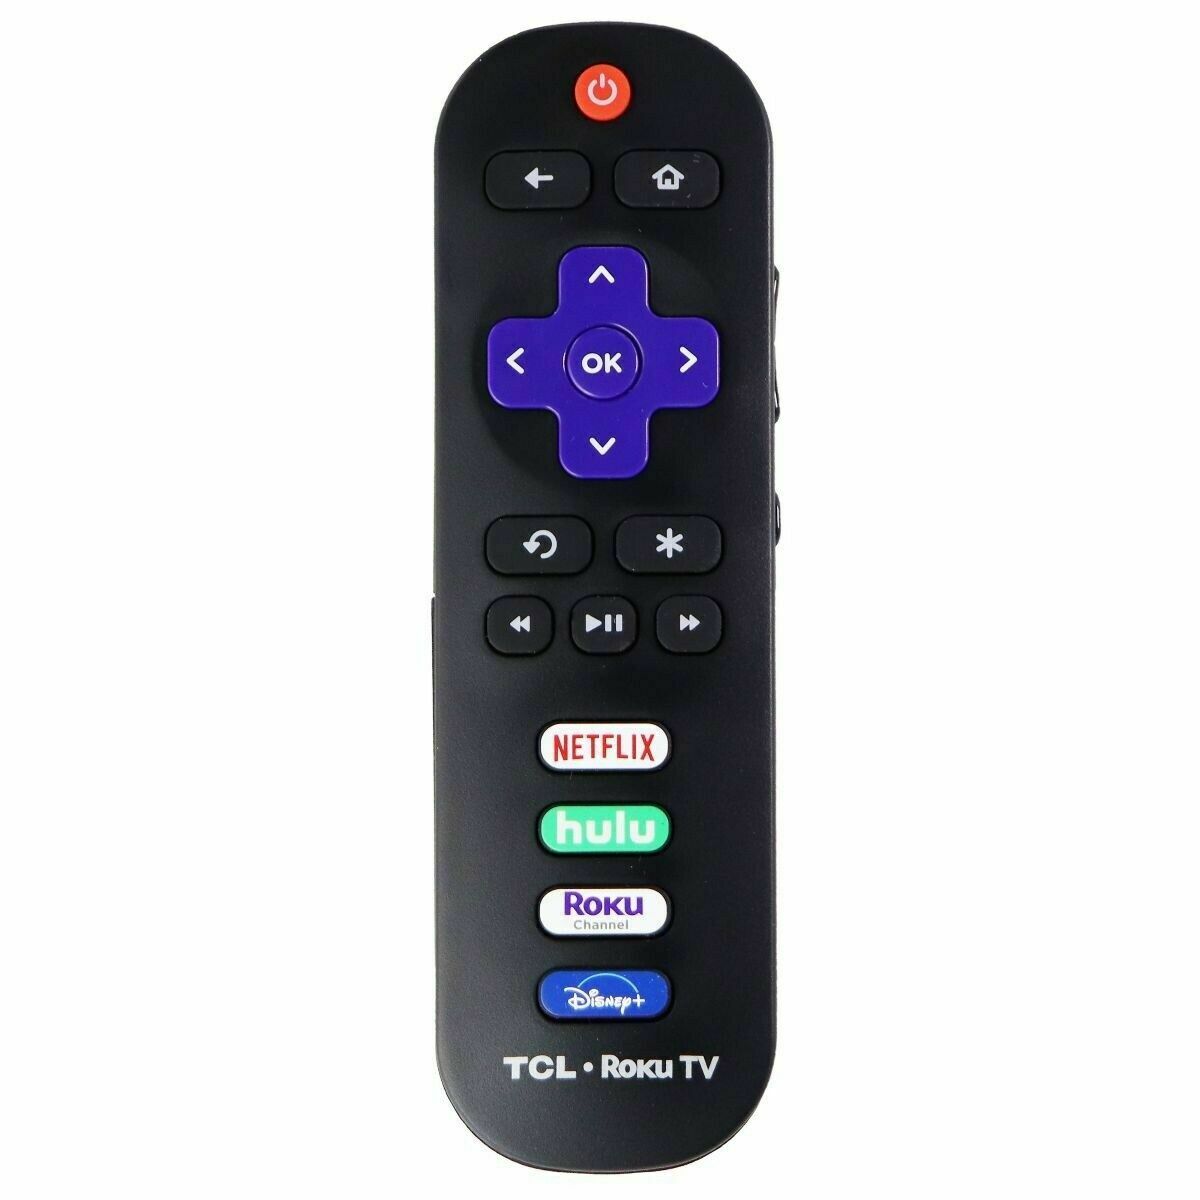 TCL Roku TV Remote Control with Netflix/Hulu/Roku/Disney+ ...